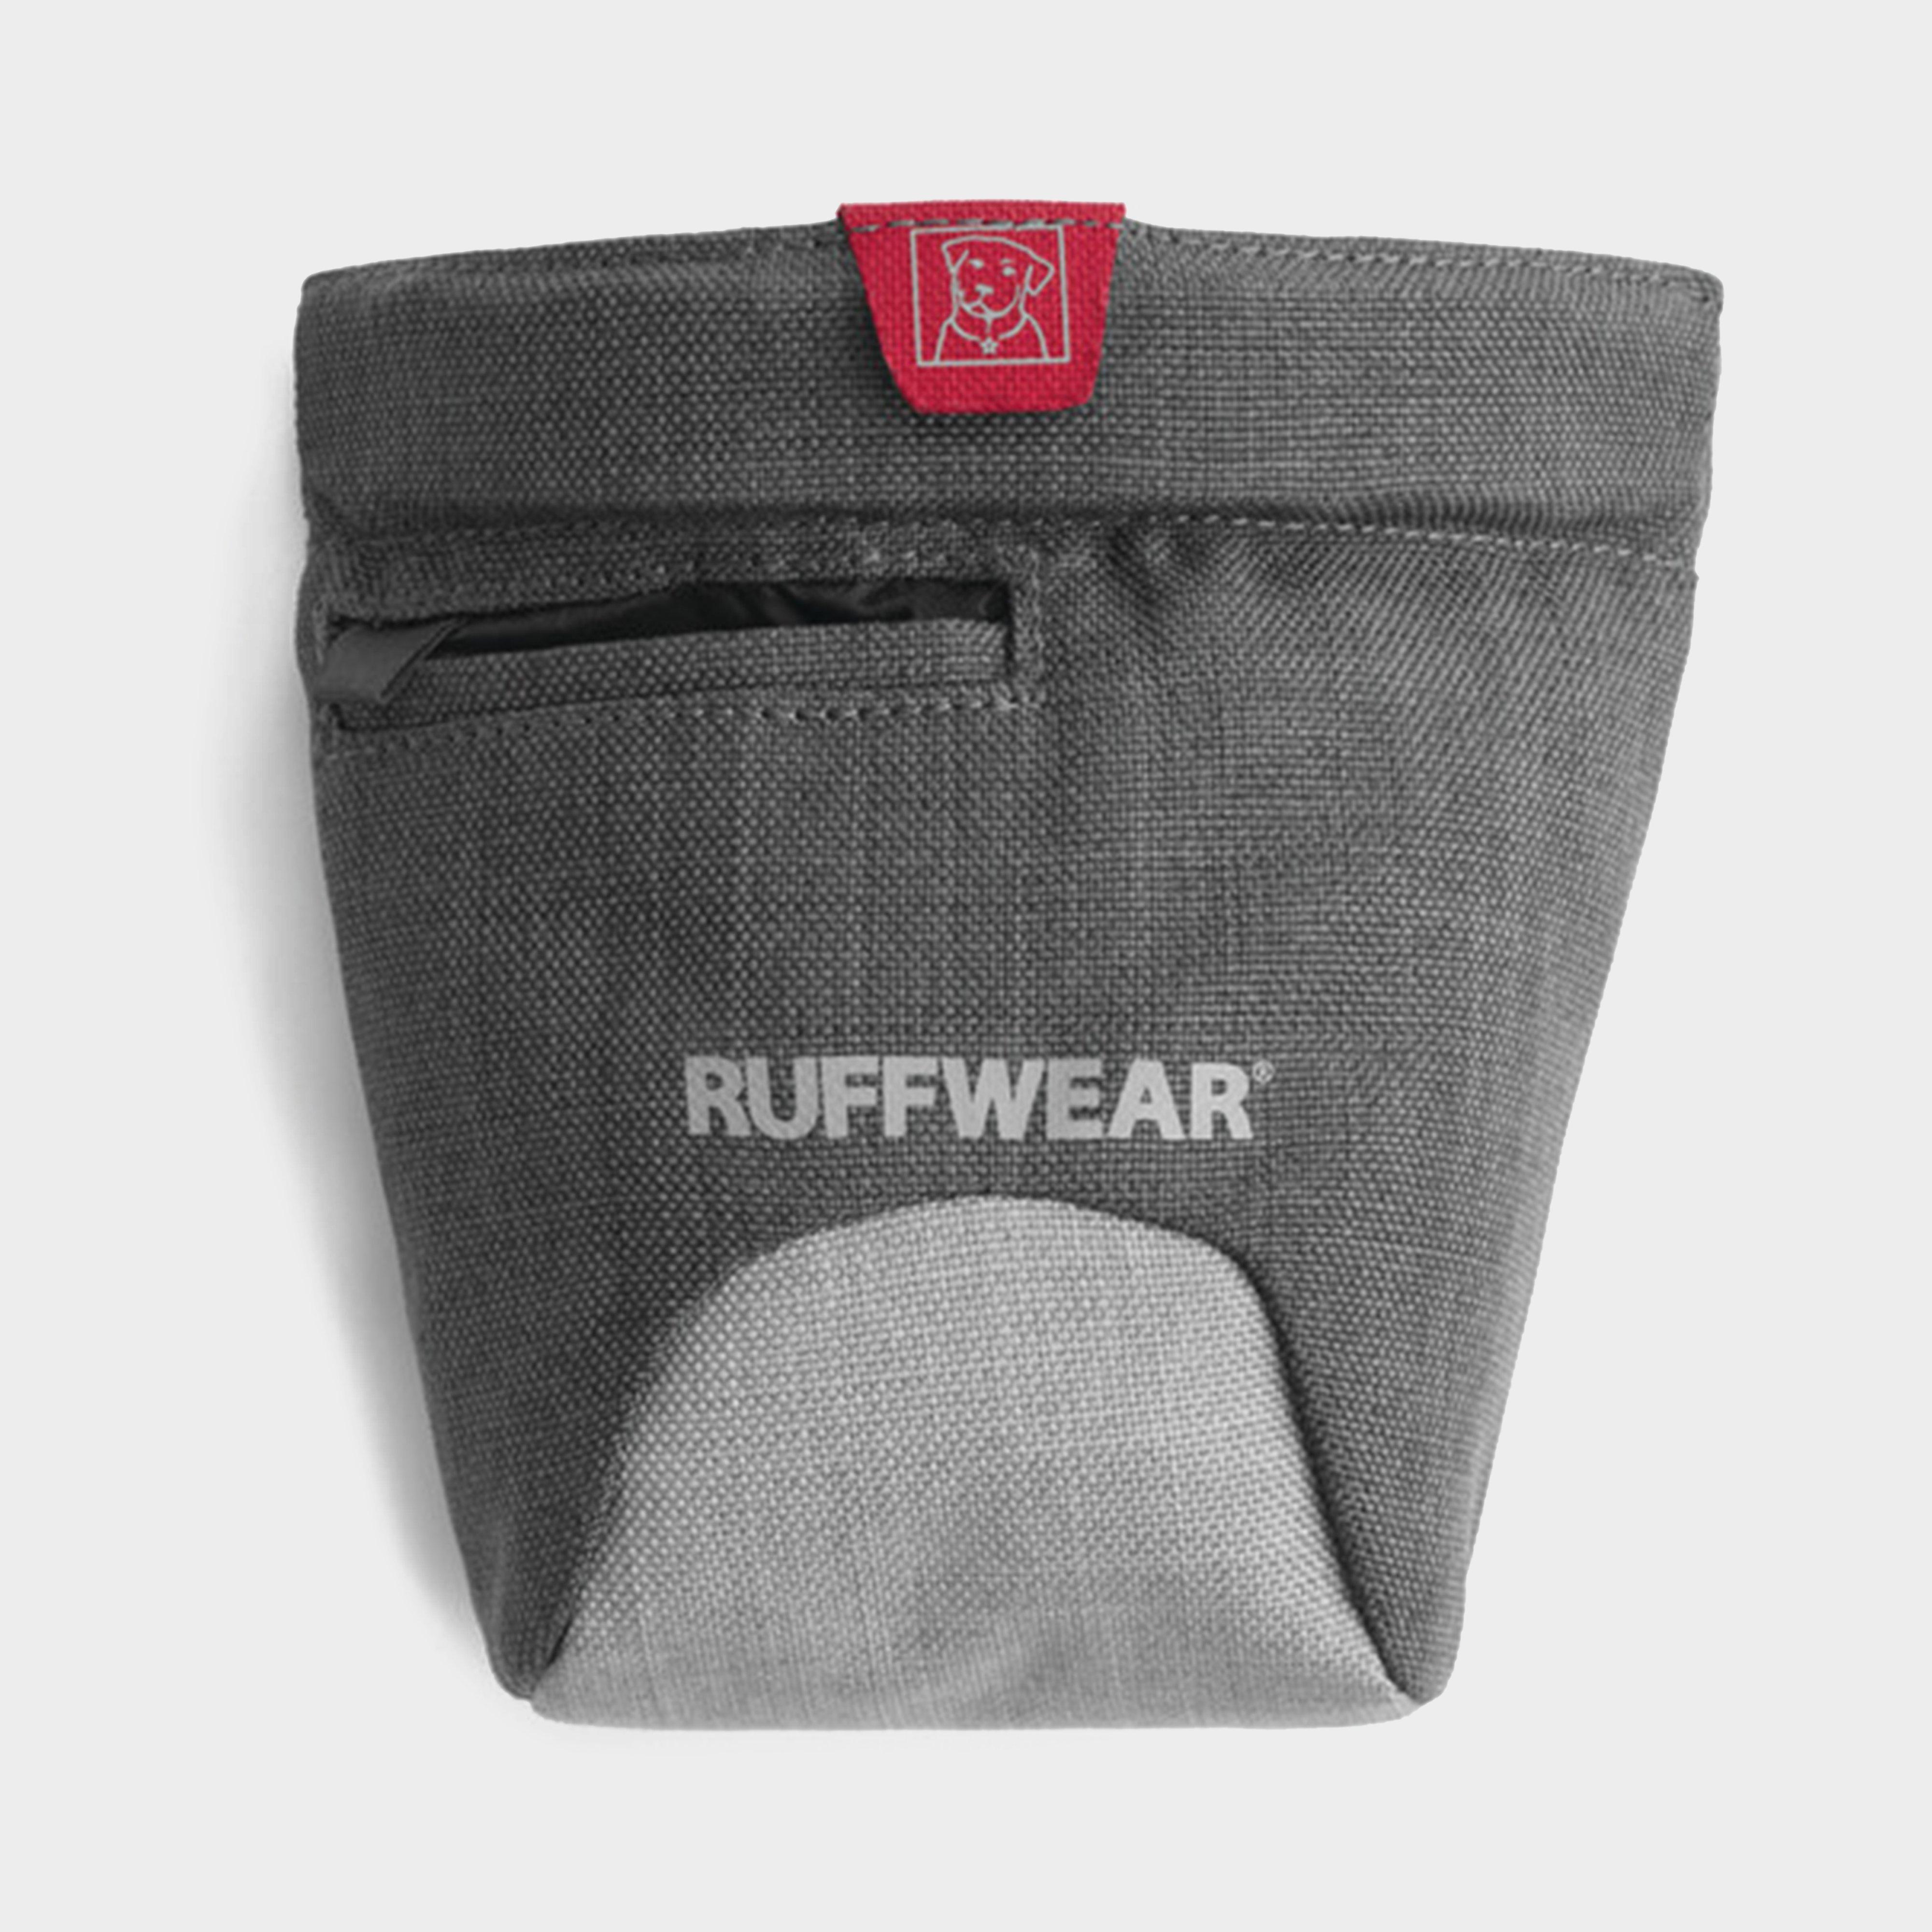 Image of Ruffwear Treat Trader Bag, Grey